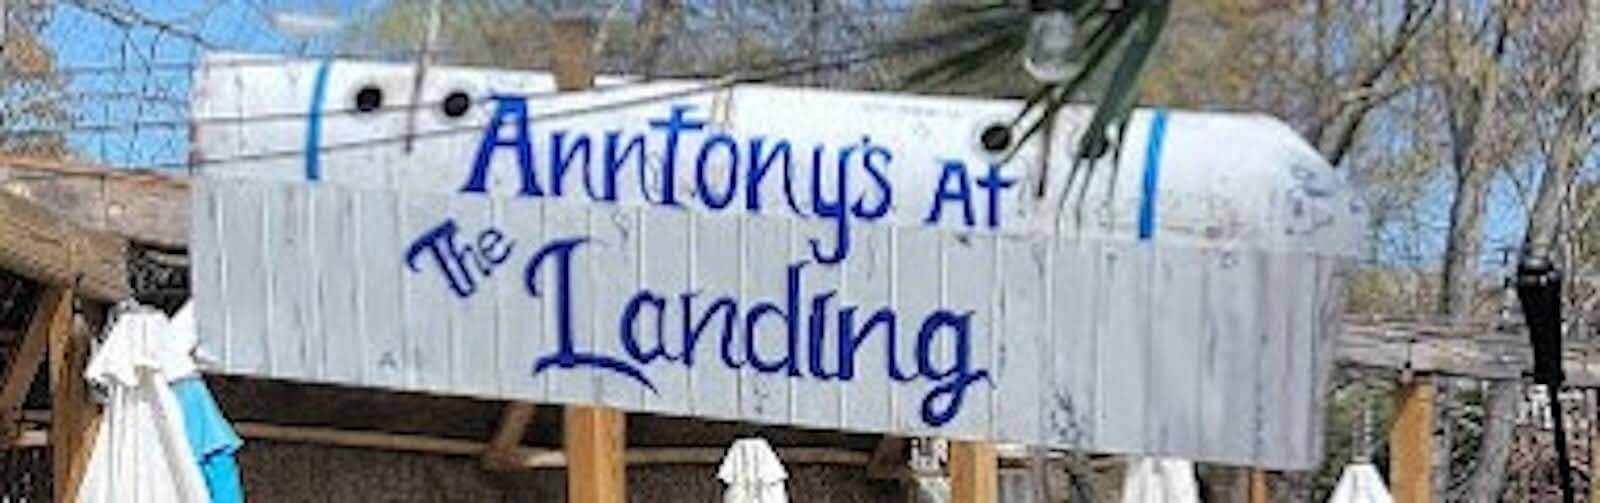 anntonys at the landing